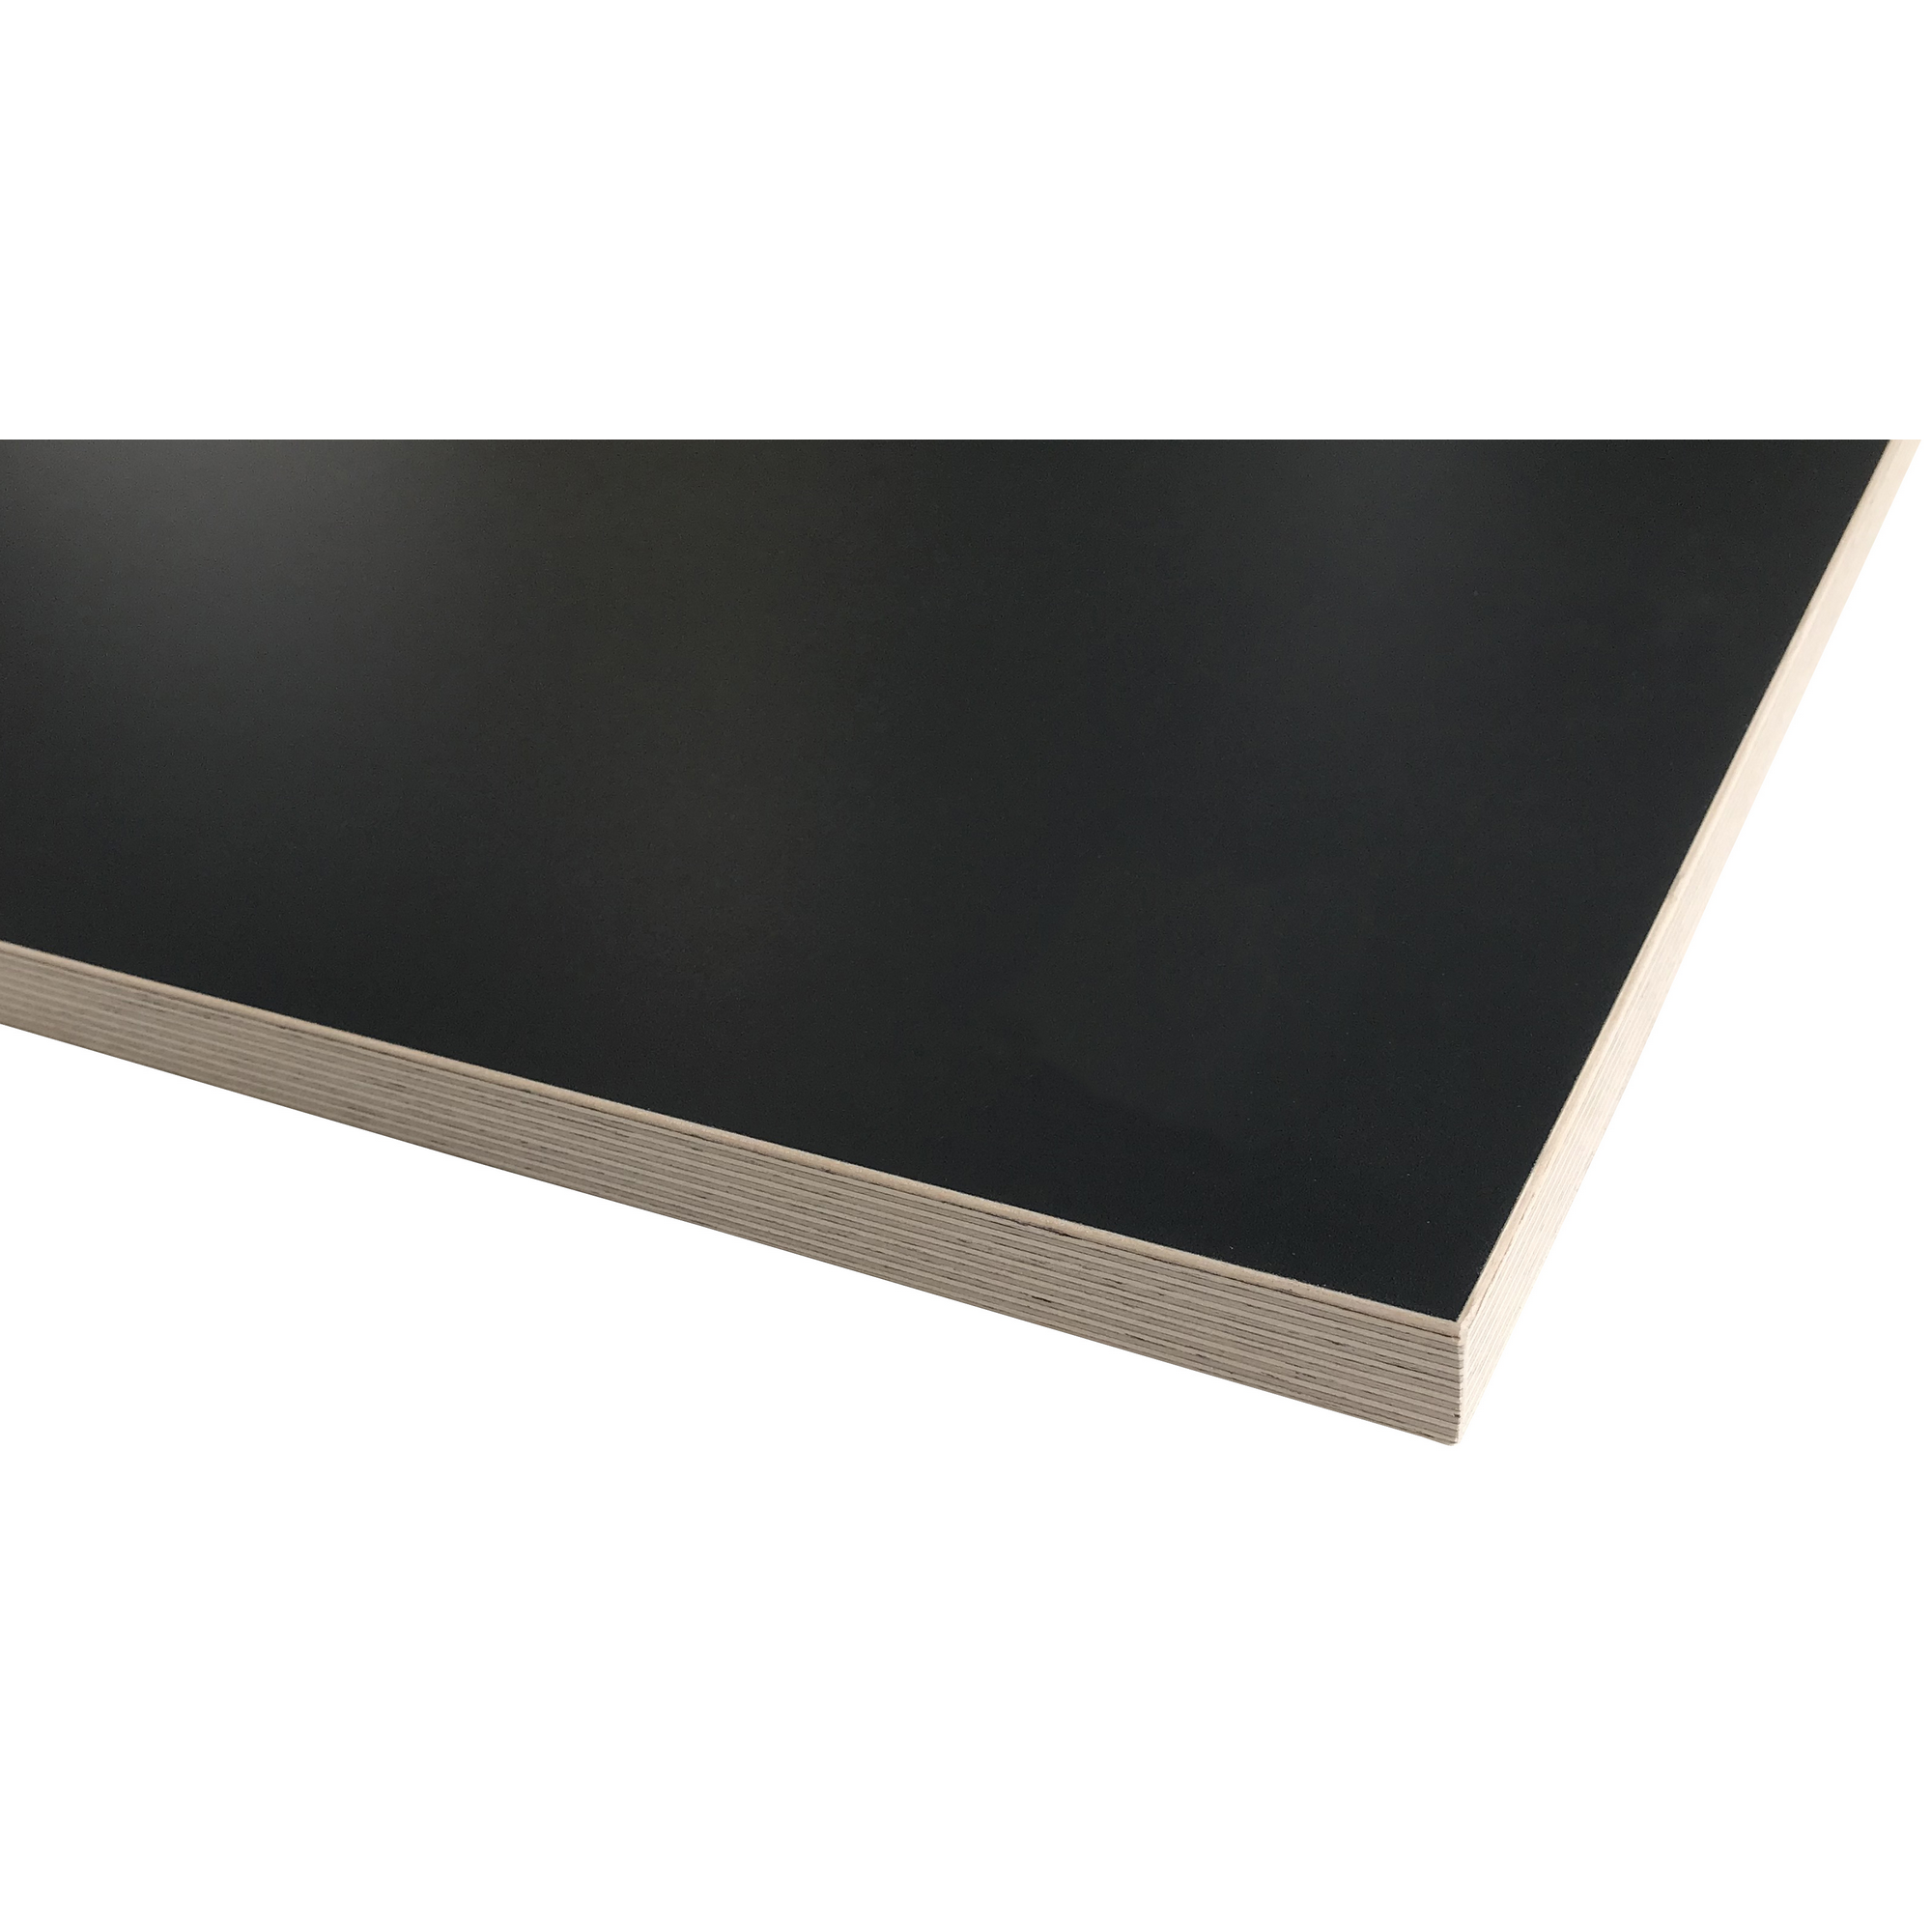 Tischplatte Dekorspan anthrazit 120 x 80 x 2,5 cm + product picture